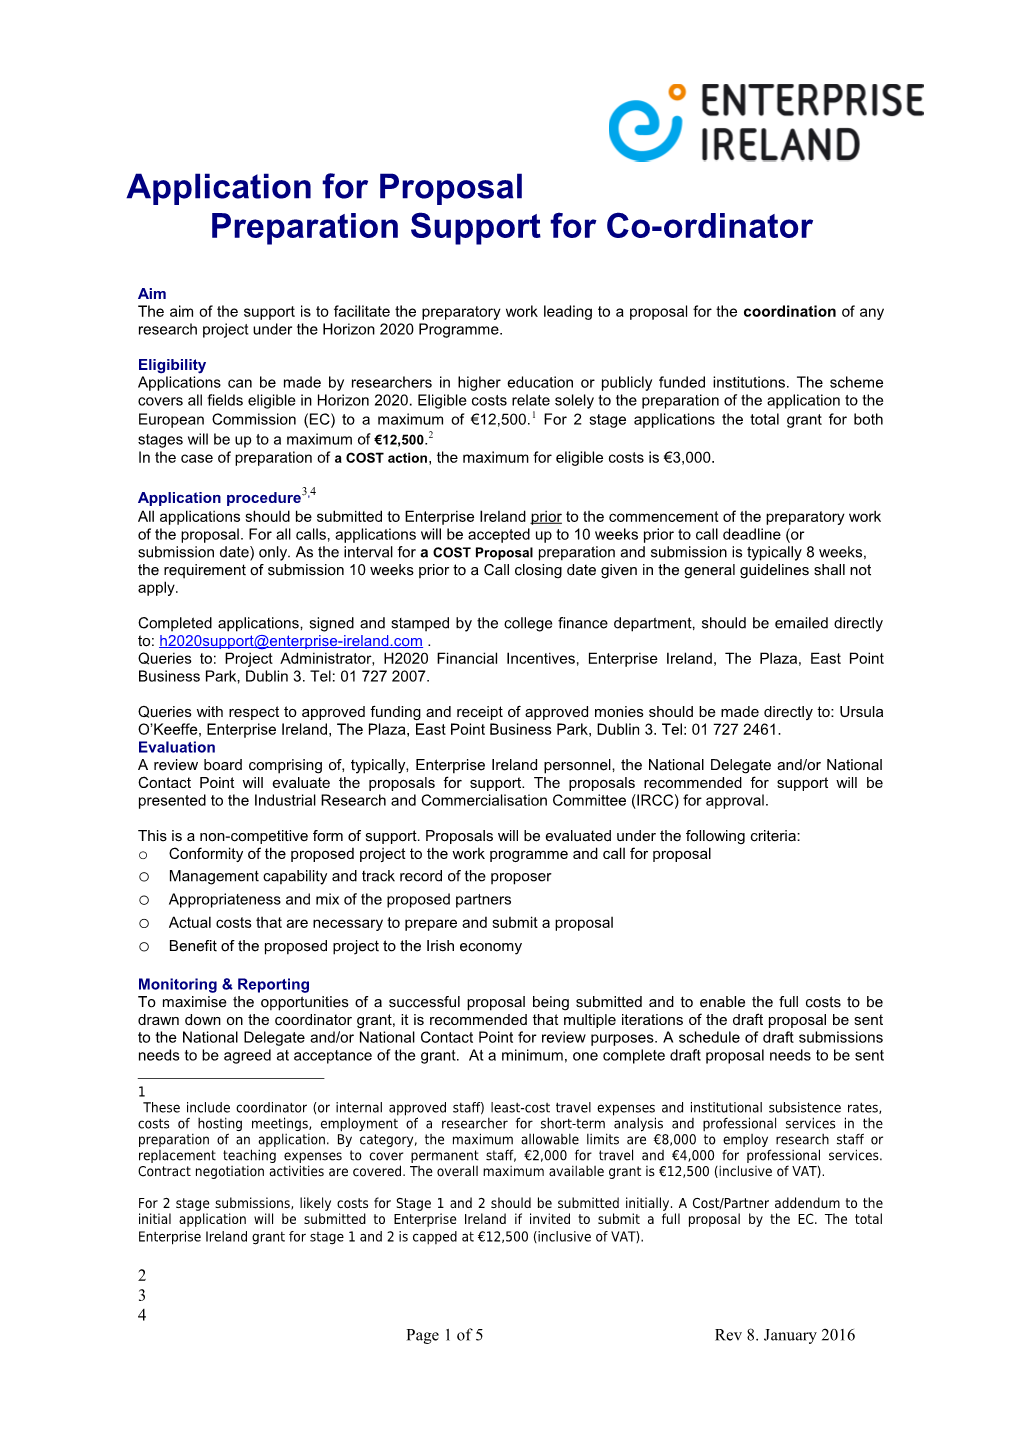 Preparation Support for Co-Ordinator